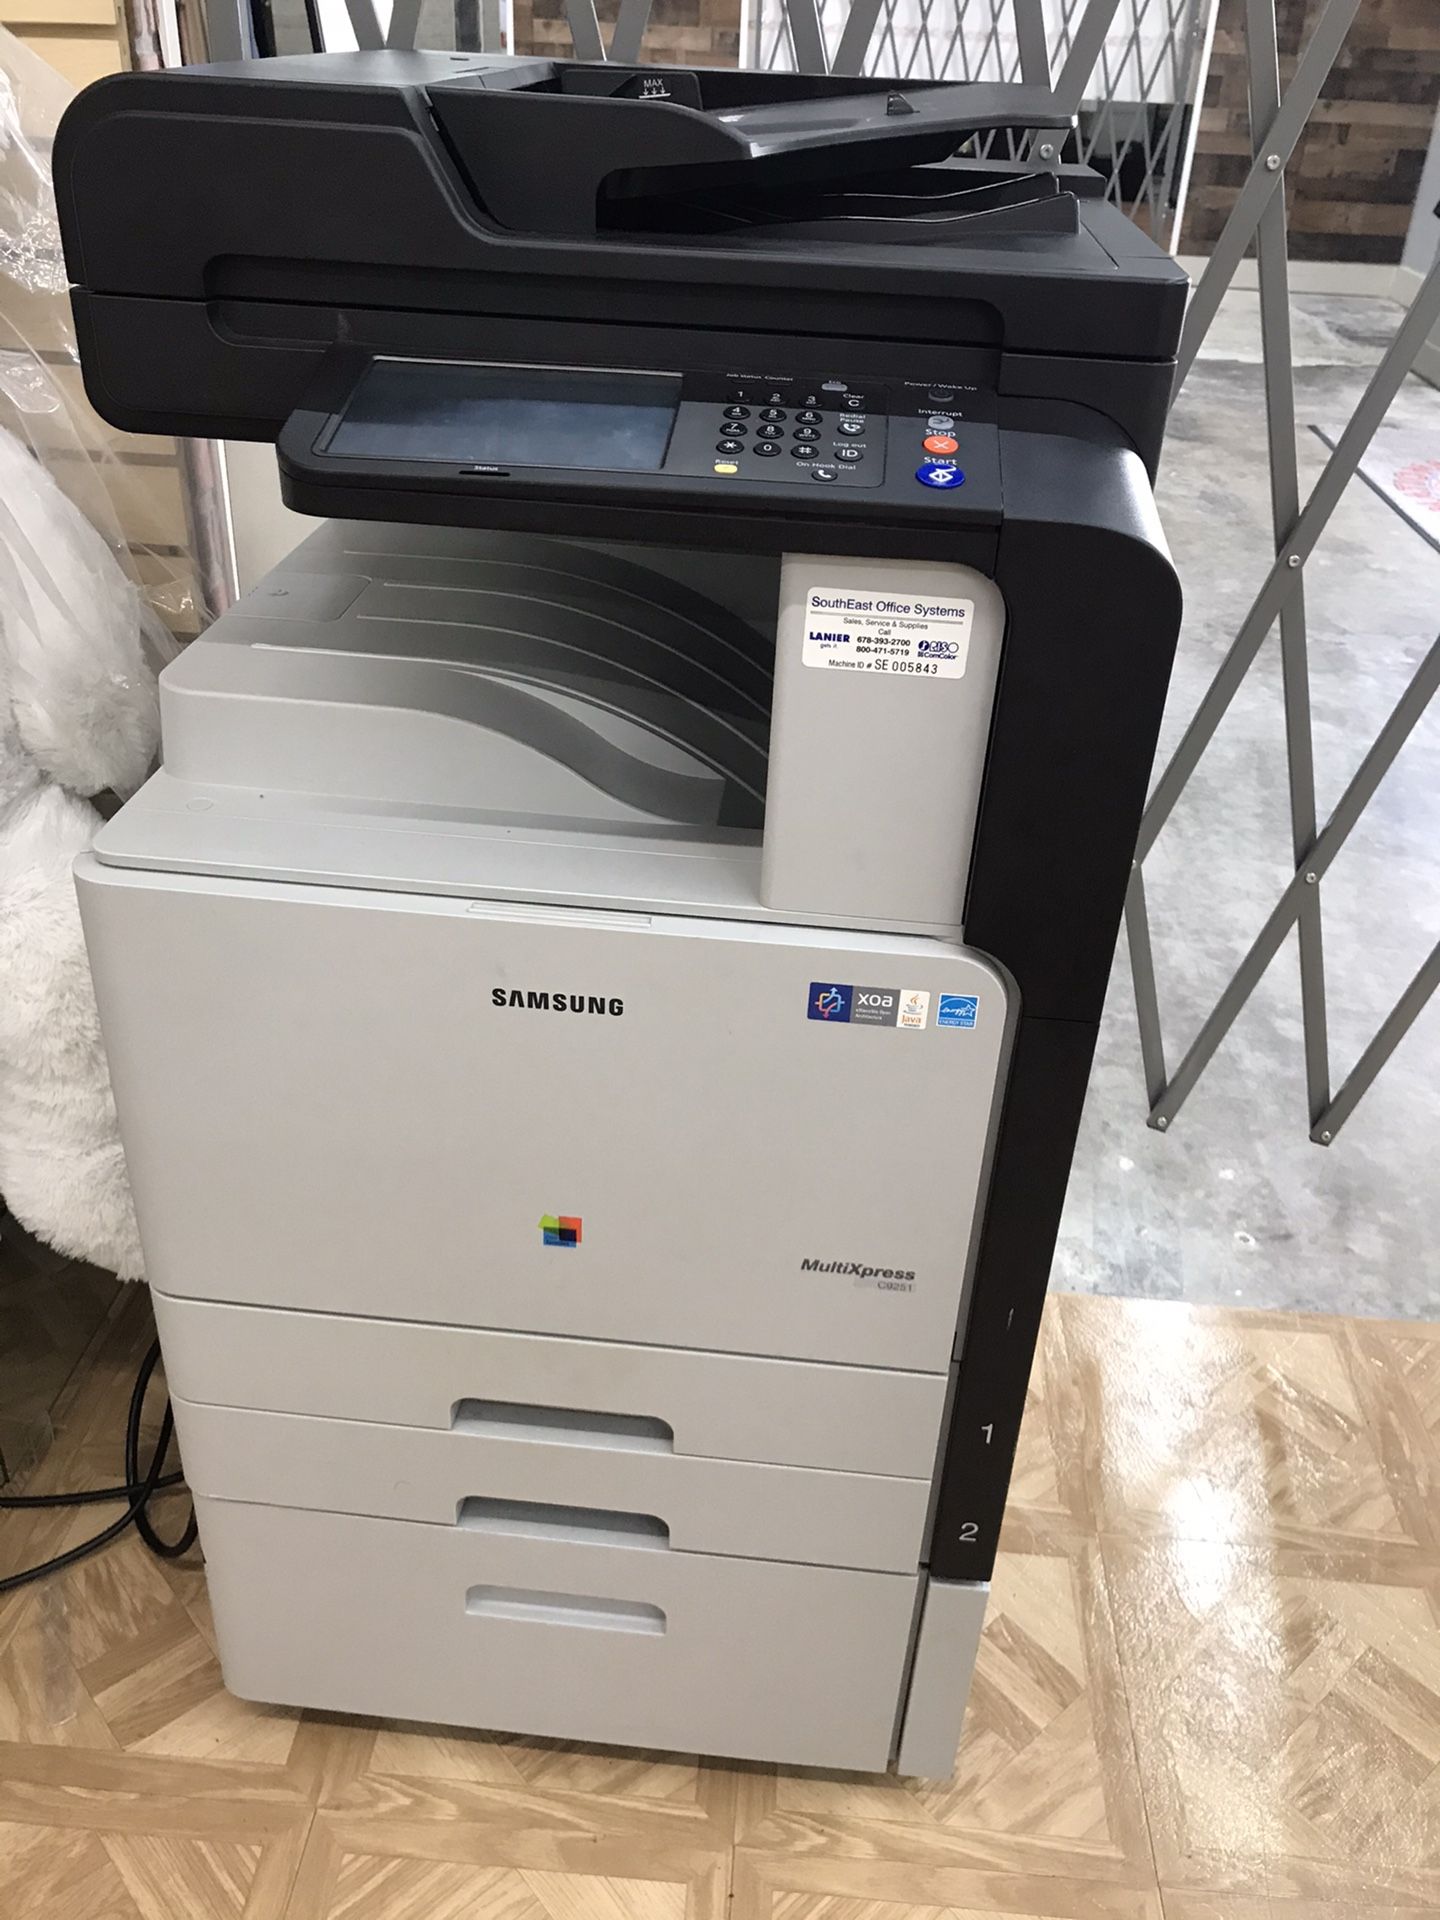 Samsung printers